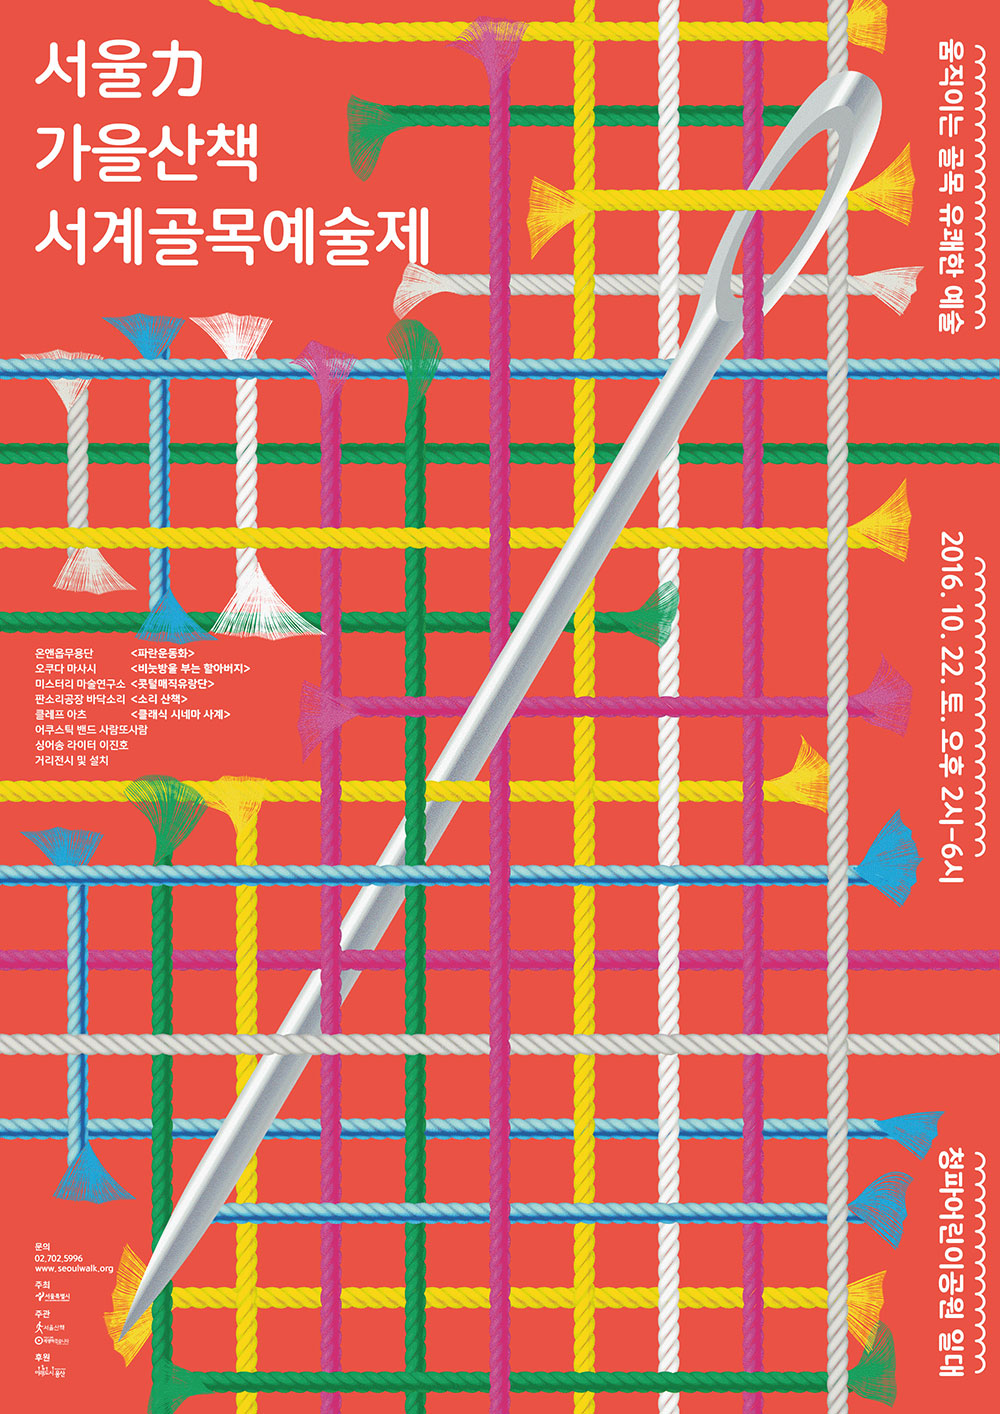 Fall Festival SeoulStation: Seogye Alley art festival